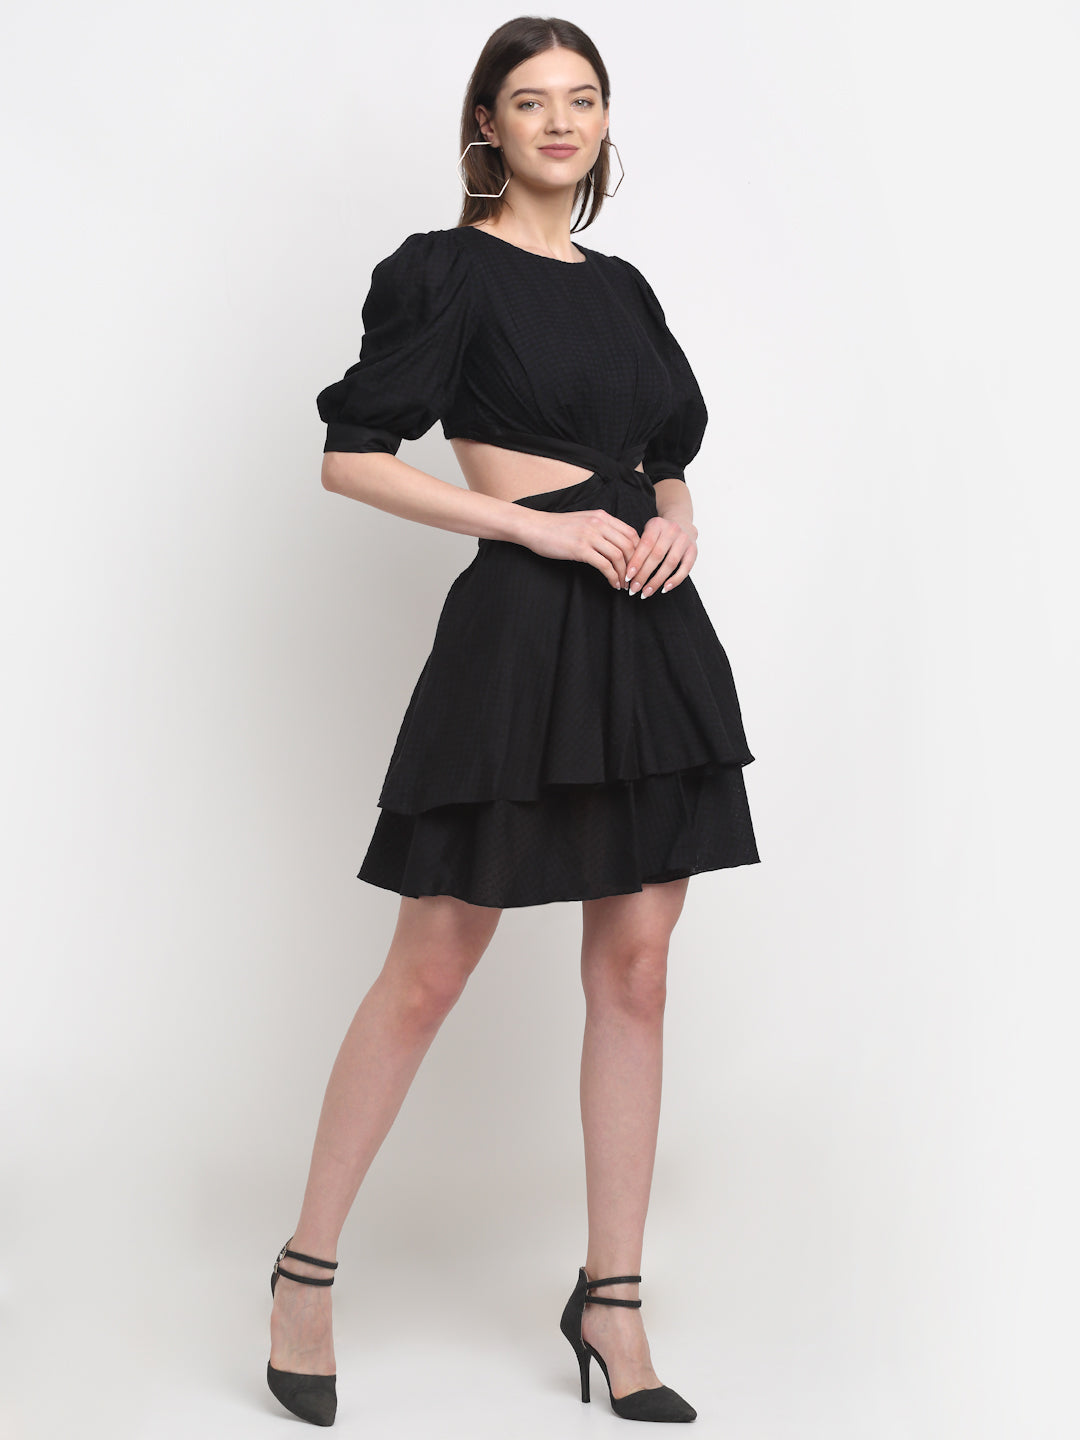 Certified Tencel Black Mini Dress at Kamakhyaa by Ewoke. This item is Black, Festive 23, Mini Dresses, Natural with azo free dyes, Party Wear, Prints, Slim Fit, Tencel, Textured, Womenswear